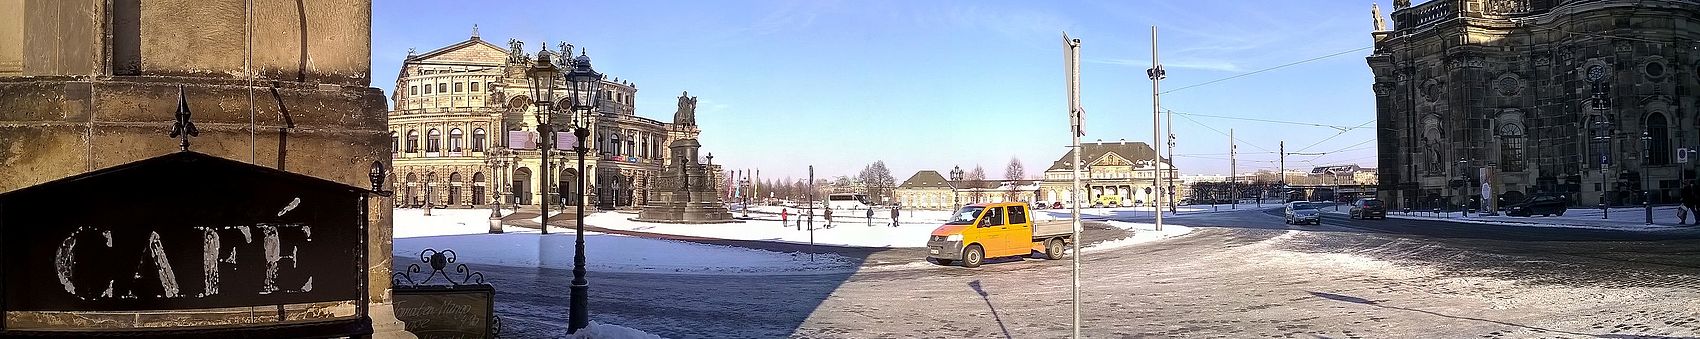 Die Semperoper in Dresden Winter Panorama Image 0001 Lupus in Saxonia